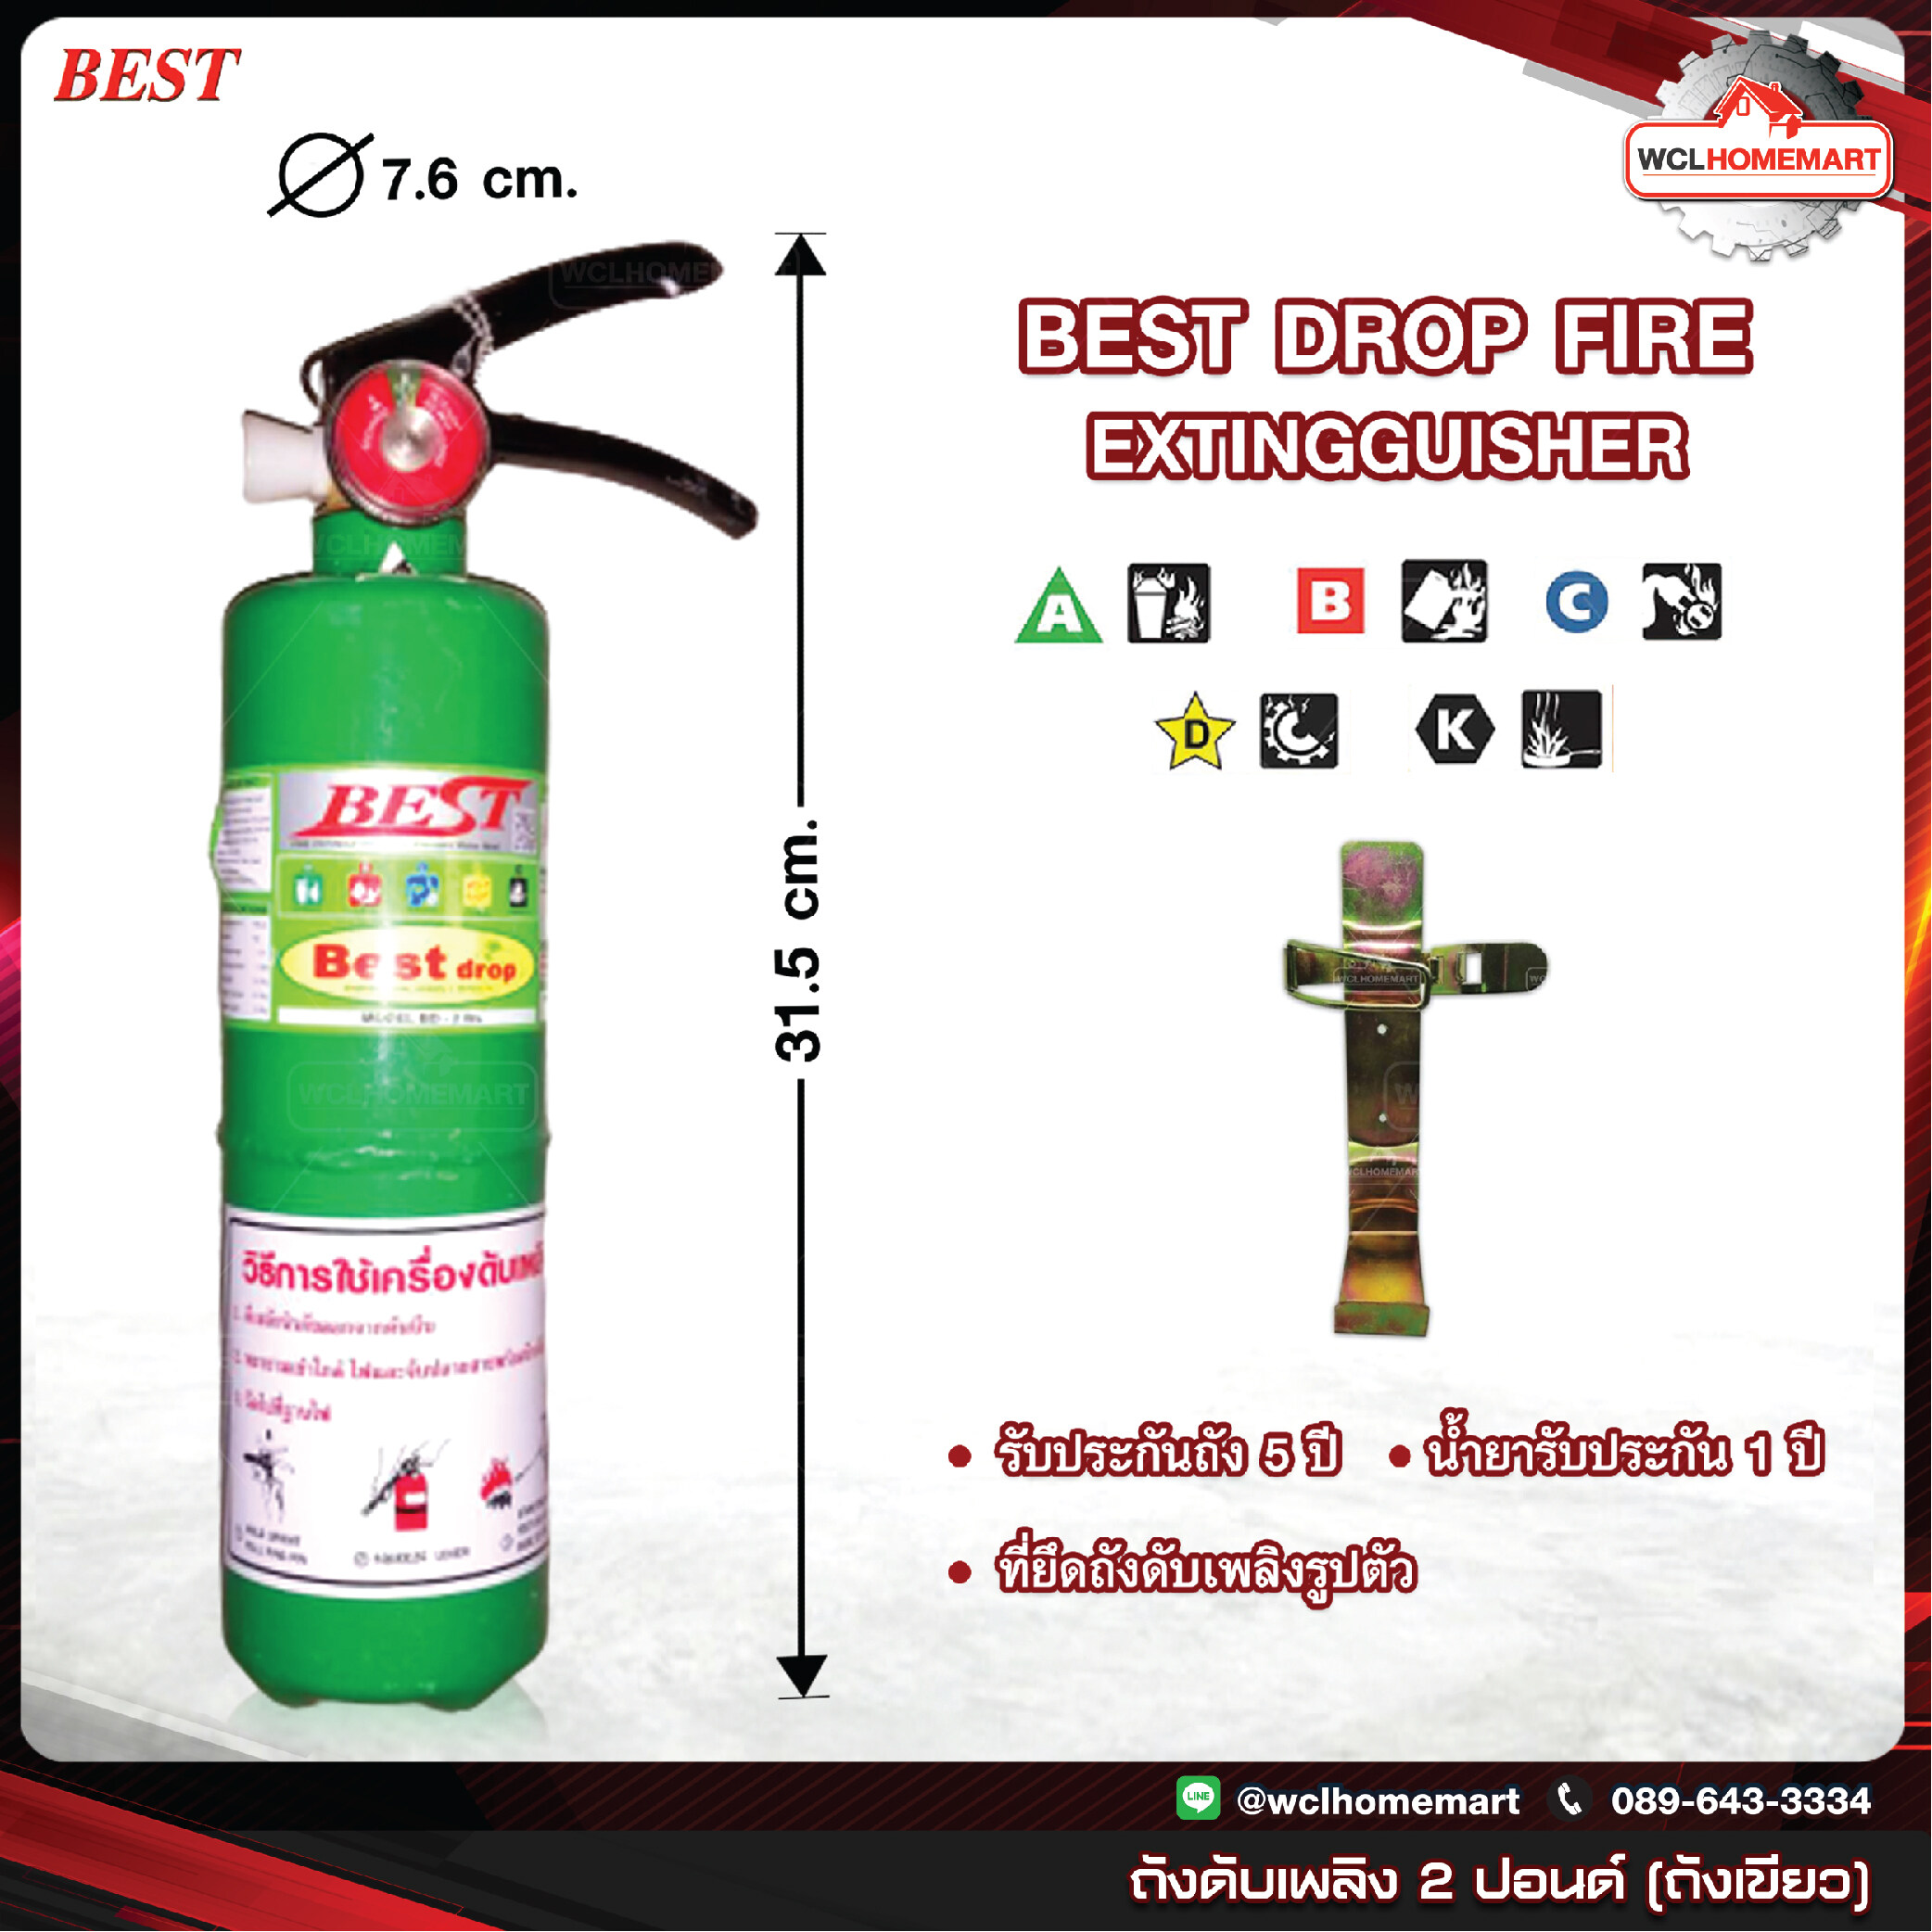 Best ถังดับเพลิง ชนิดน้ำยา Best Drop ขนาด 2 ปอนด์ ถังสีเขียว Fire Extinguisher